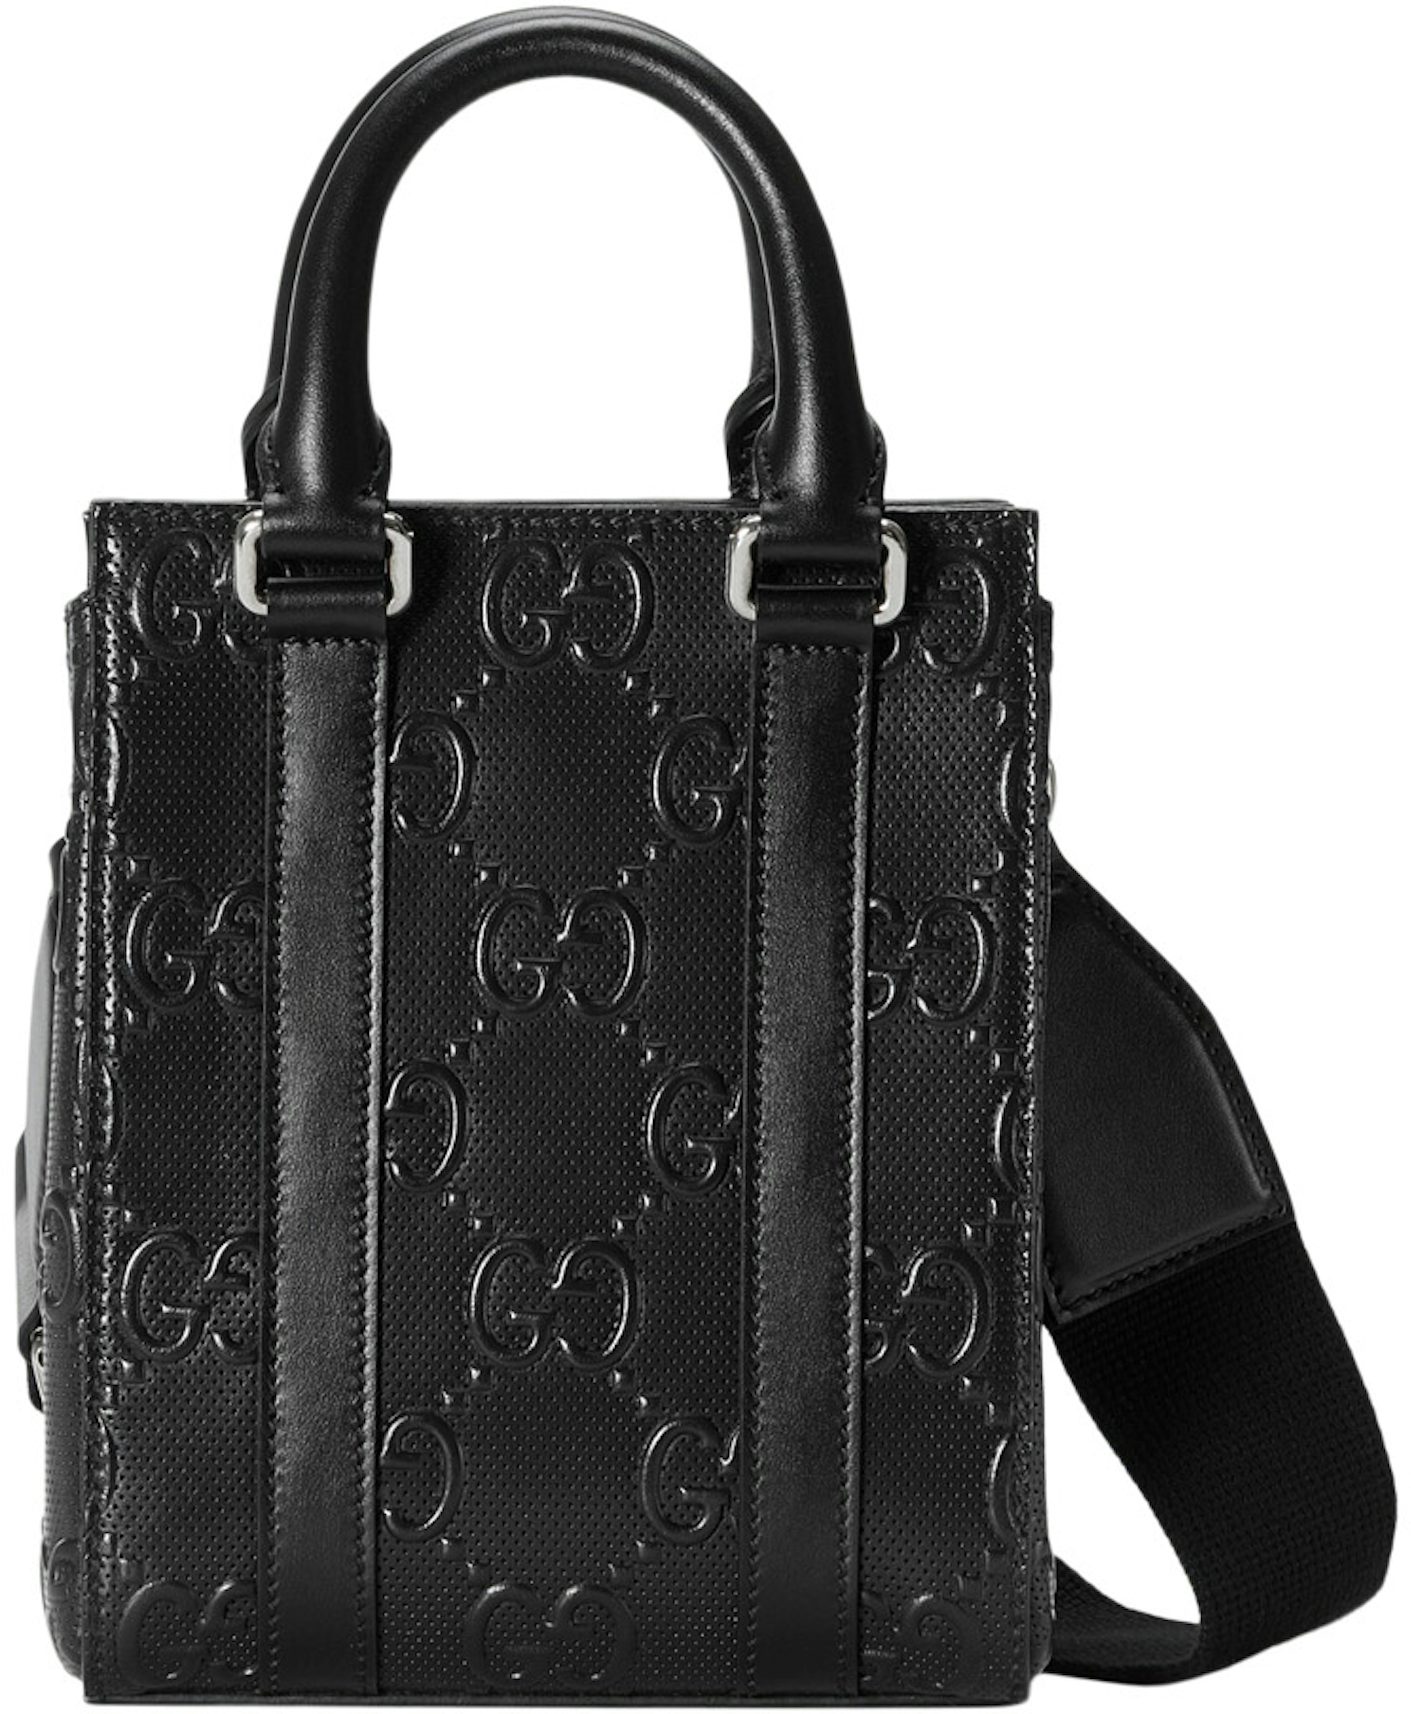 Jumbo GG large tote bag in black leather